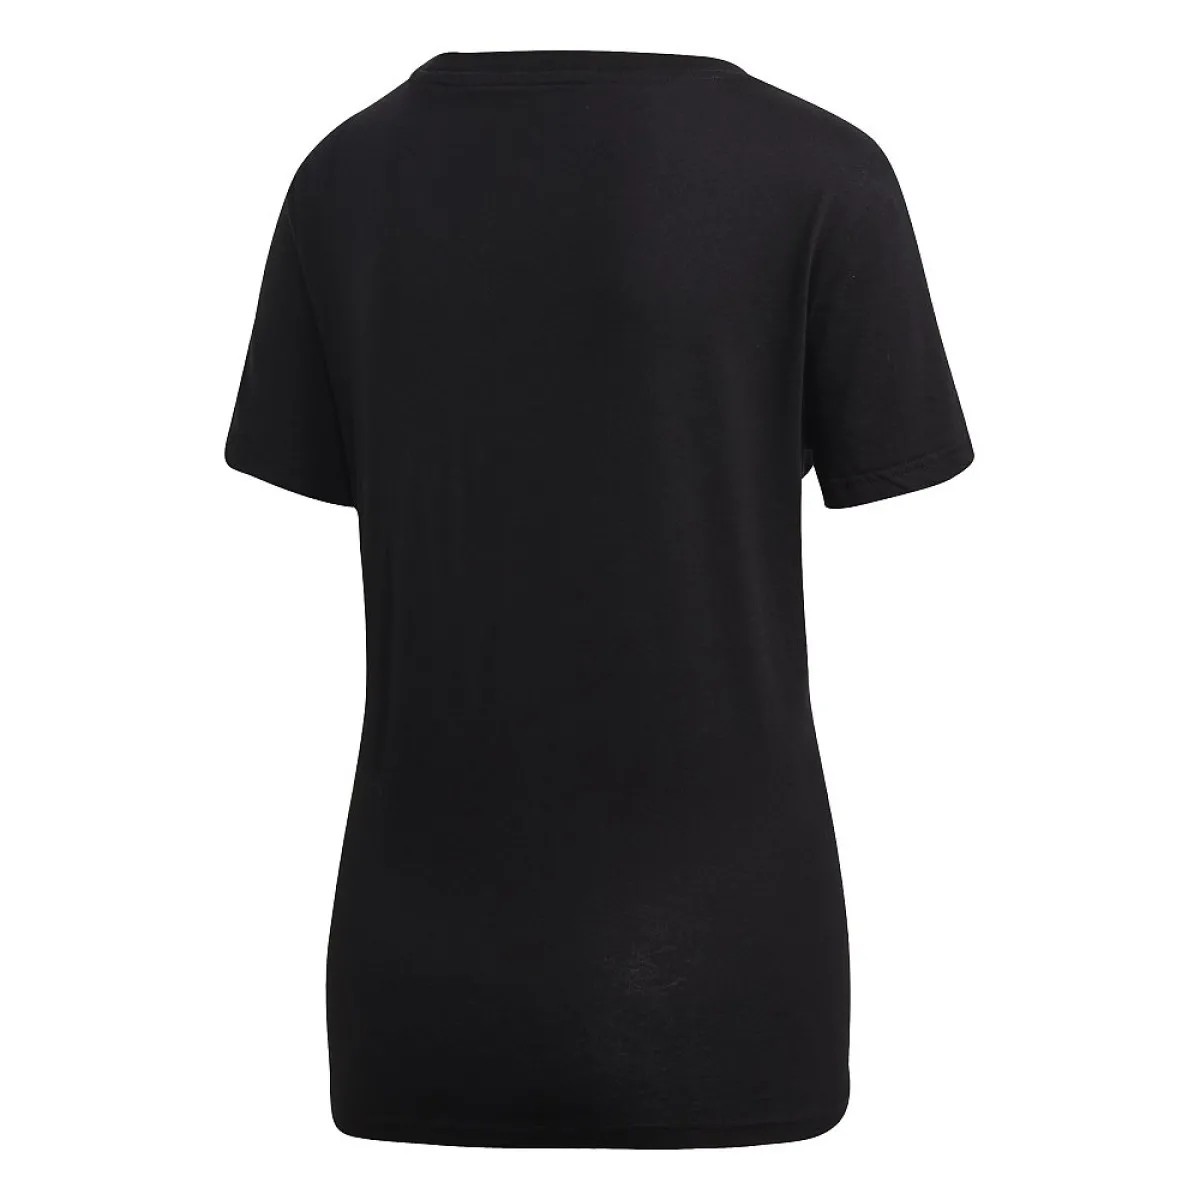 adidas Women s Performance Slim Fit T-Shirt black